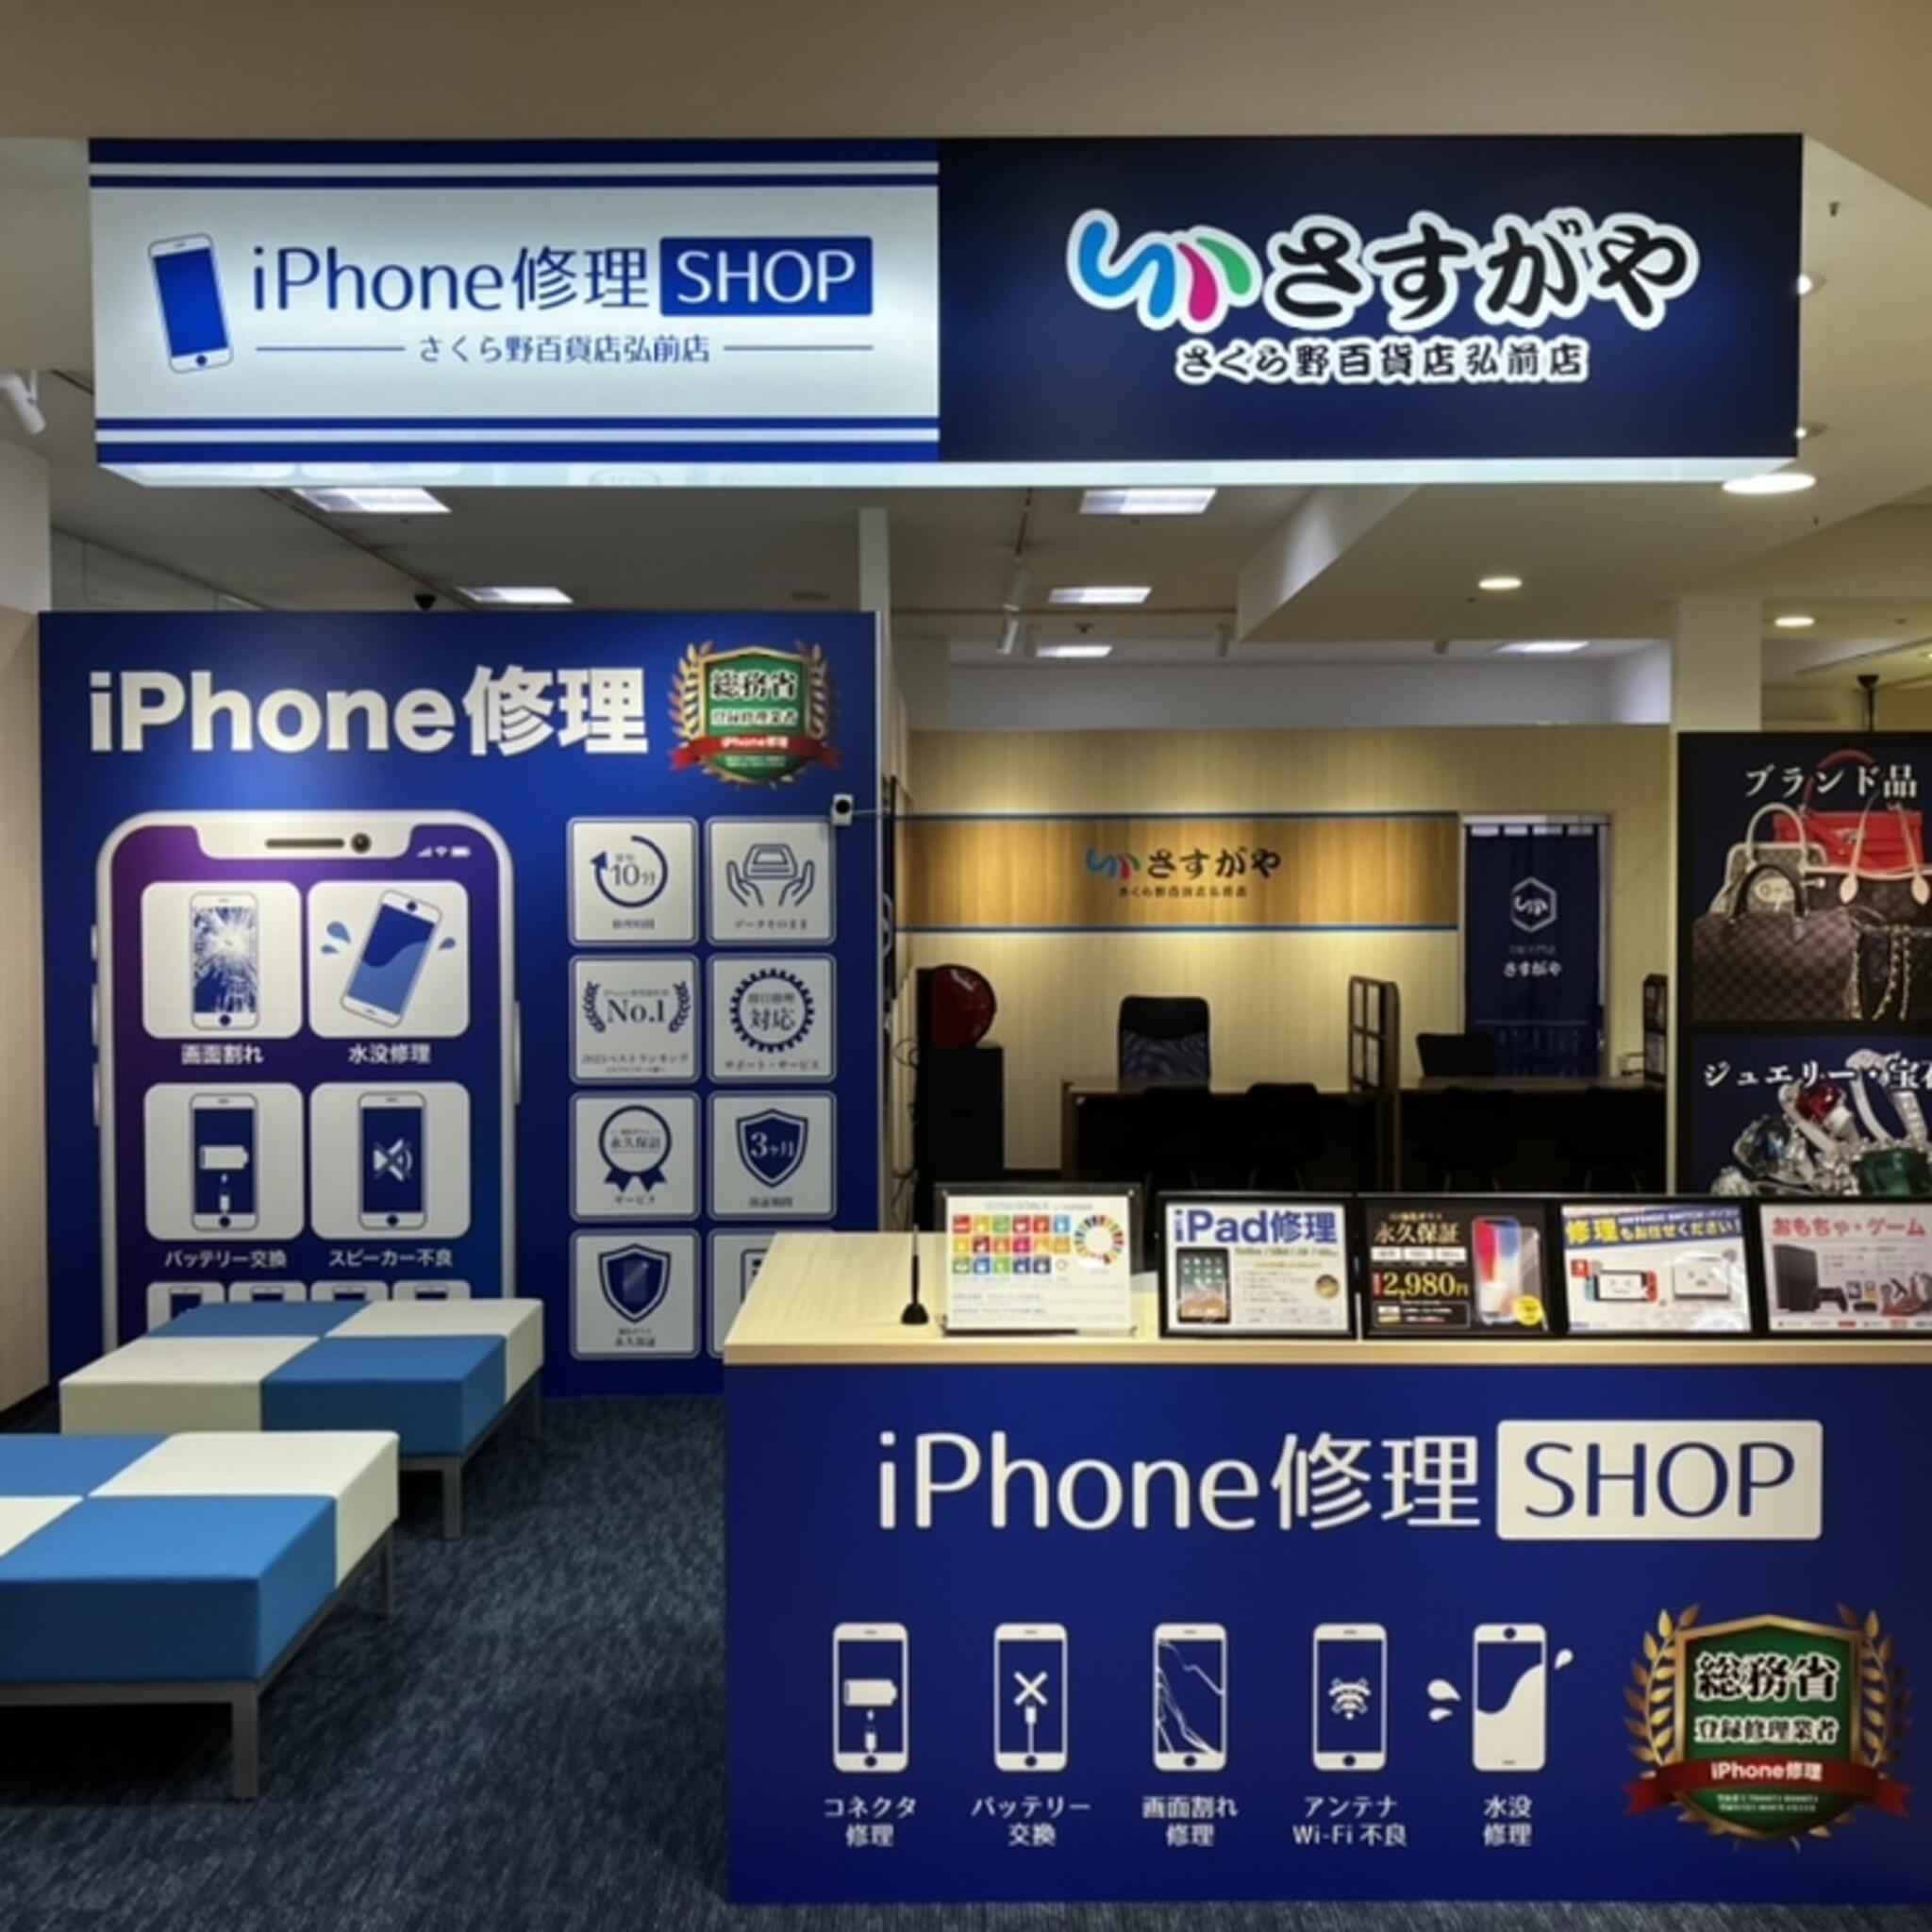 iPhone修理SHOP さくら野百貨店弘前店の代表写真1